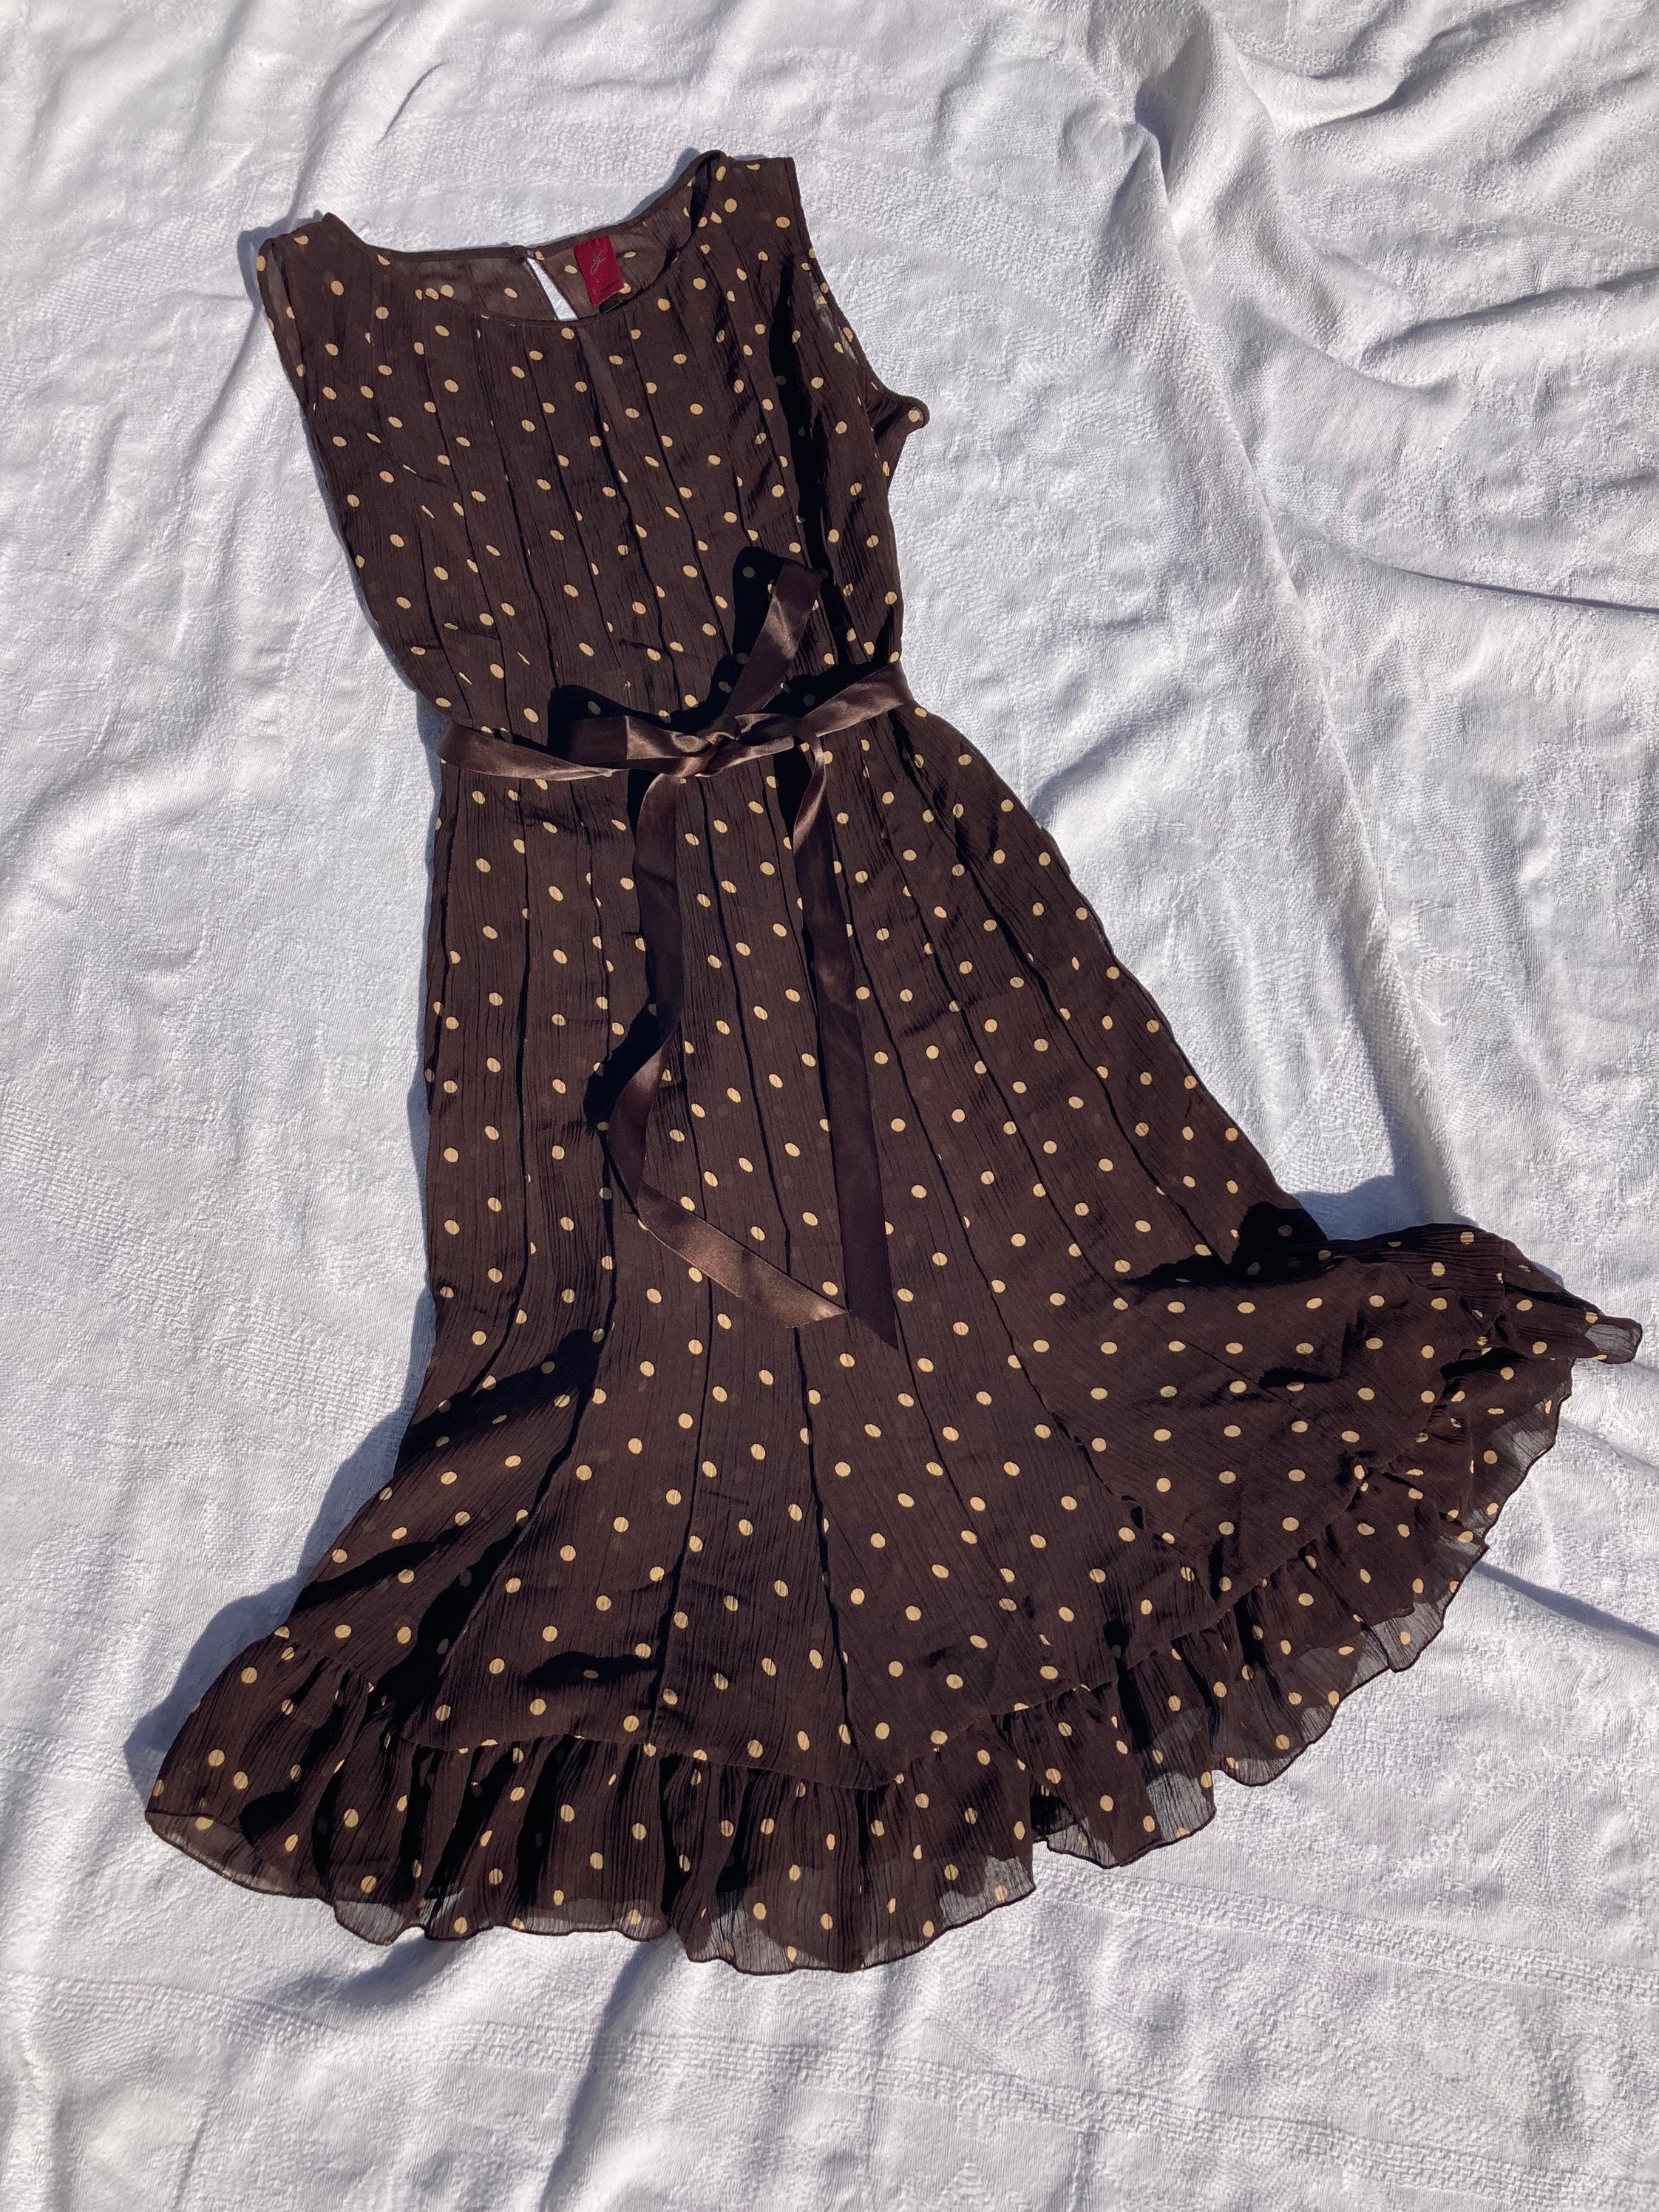 Brown Polka Dot Dress Sheer Flirty Flouncy Ruffle Z Studio Size 16 Knee  Length Sleeveless Dress -  Canada